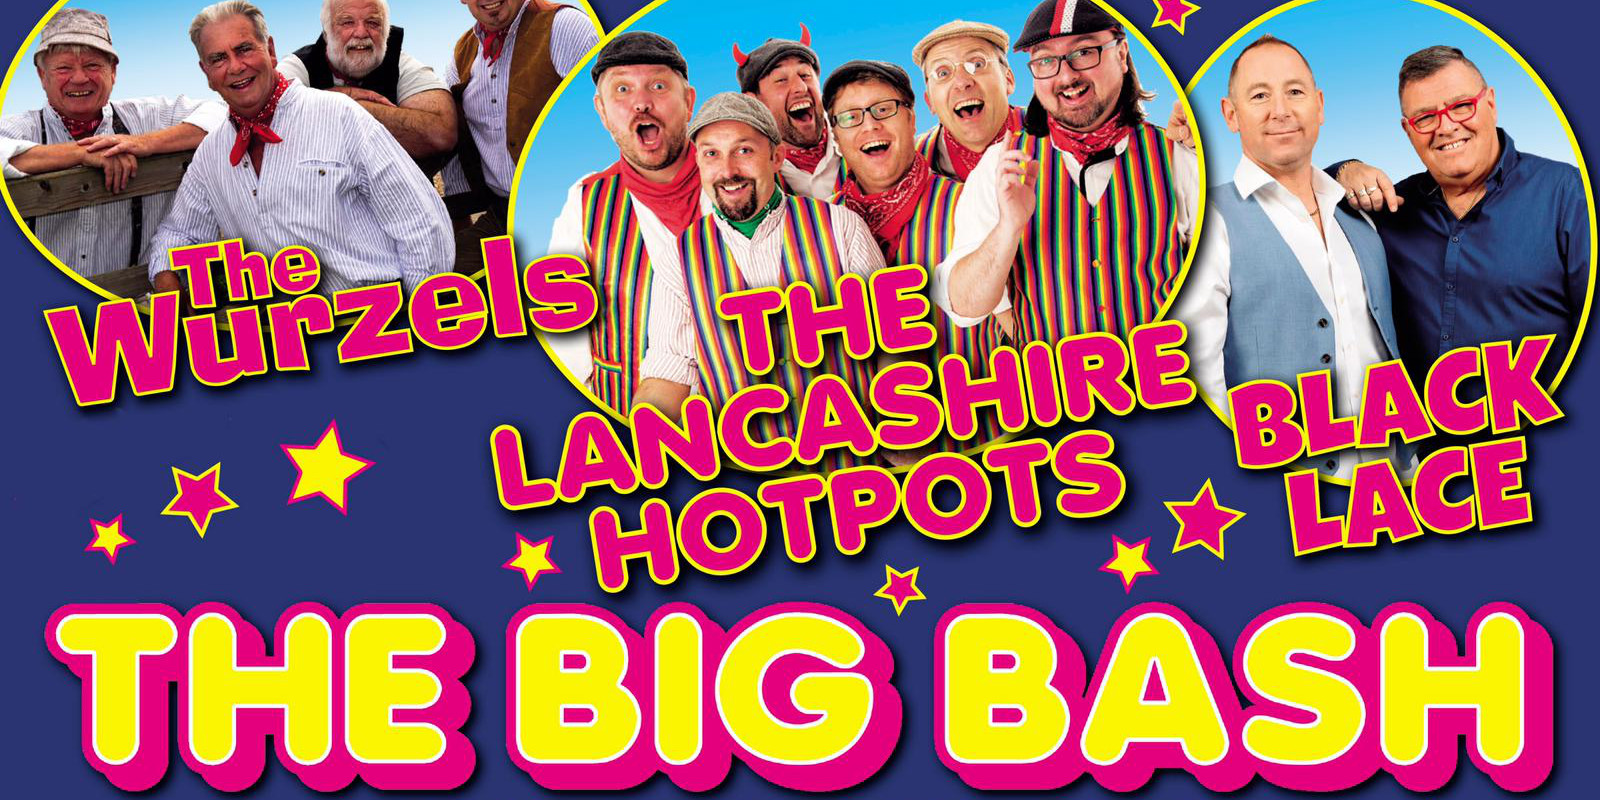 The Lancashire Hotpots band group photo